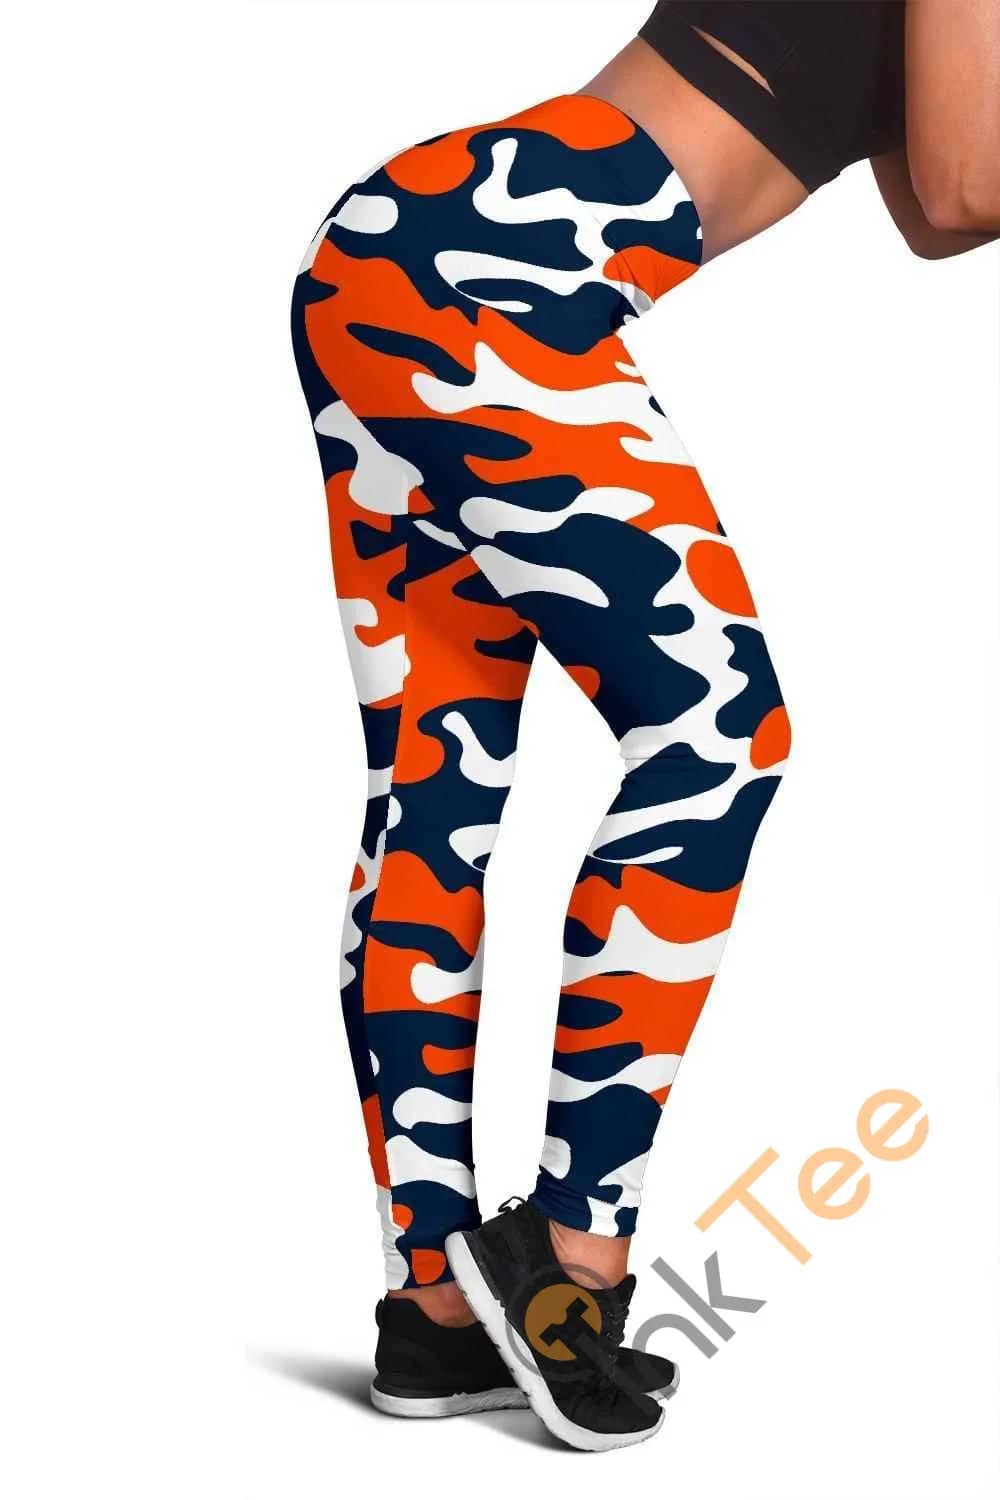 Denver Broncos Inspired Tru Camo 3D All Over Print For Yoga Fitness Fashion Women's Leggings